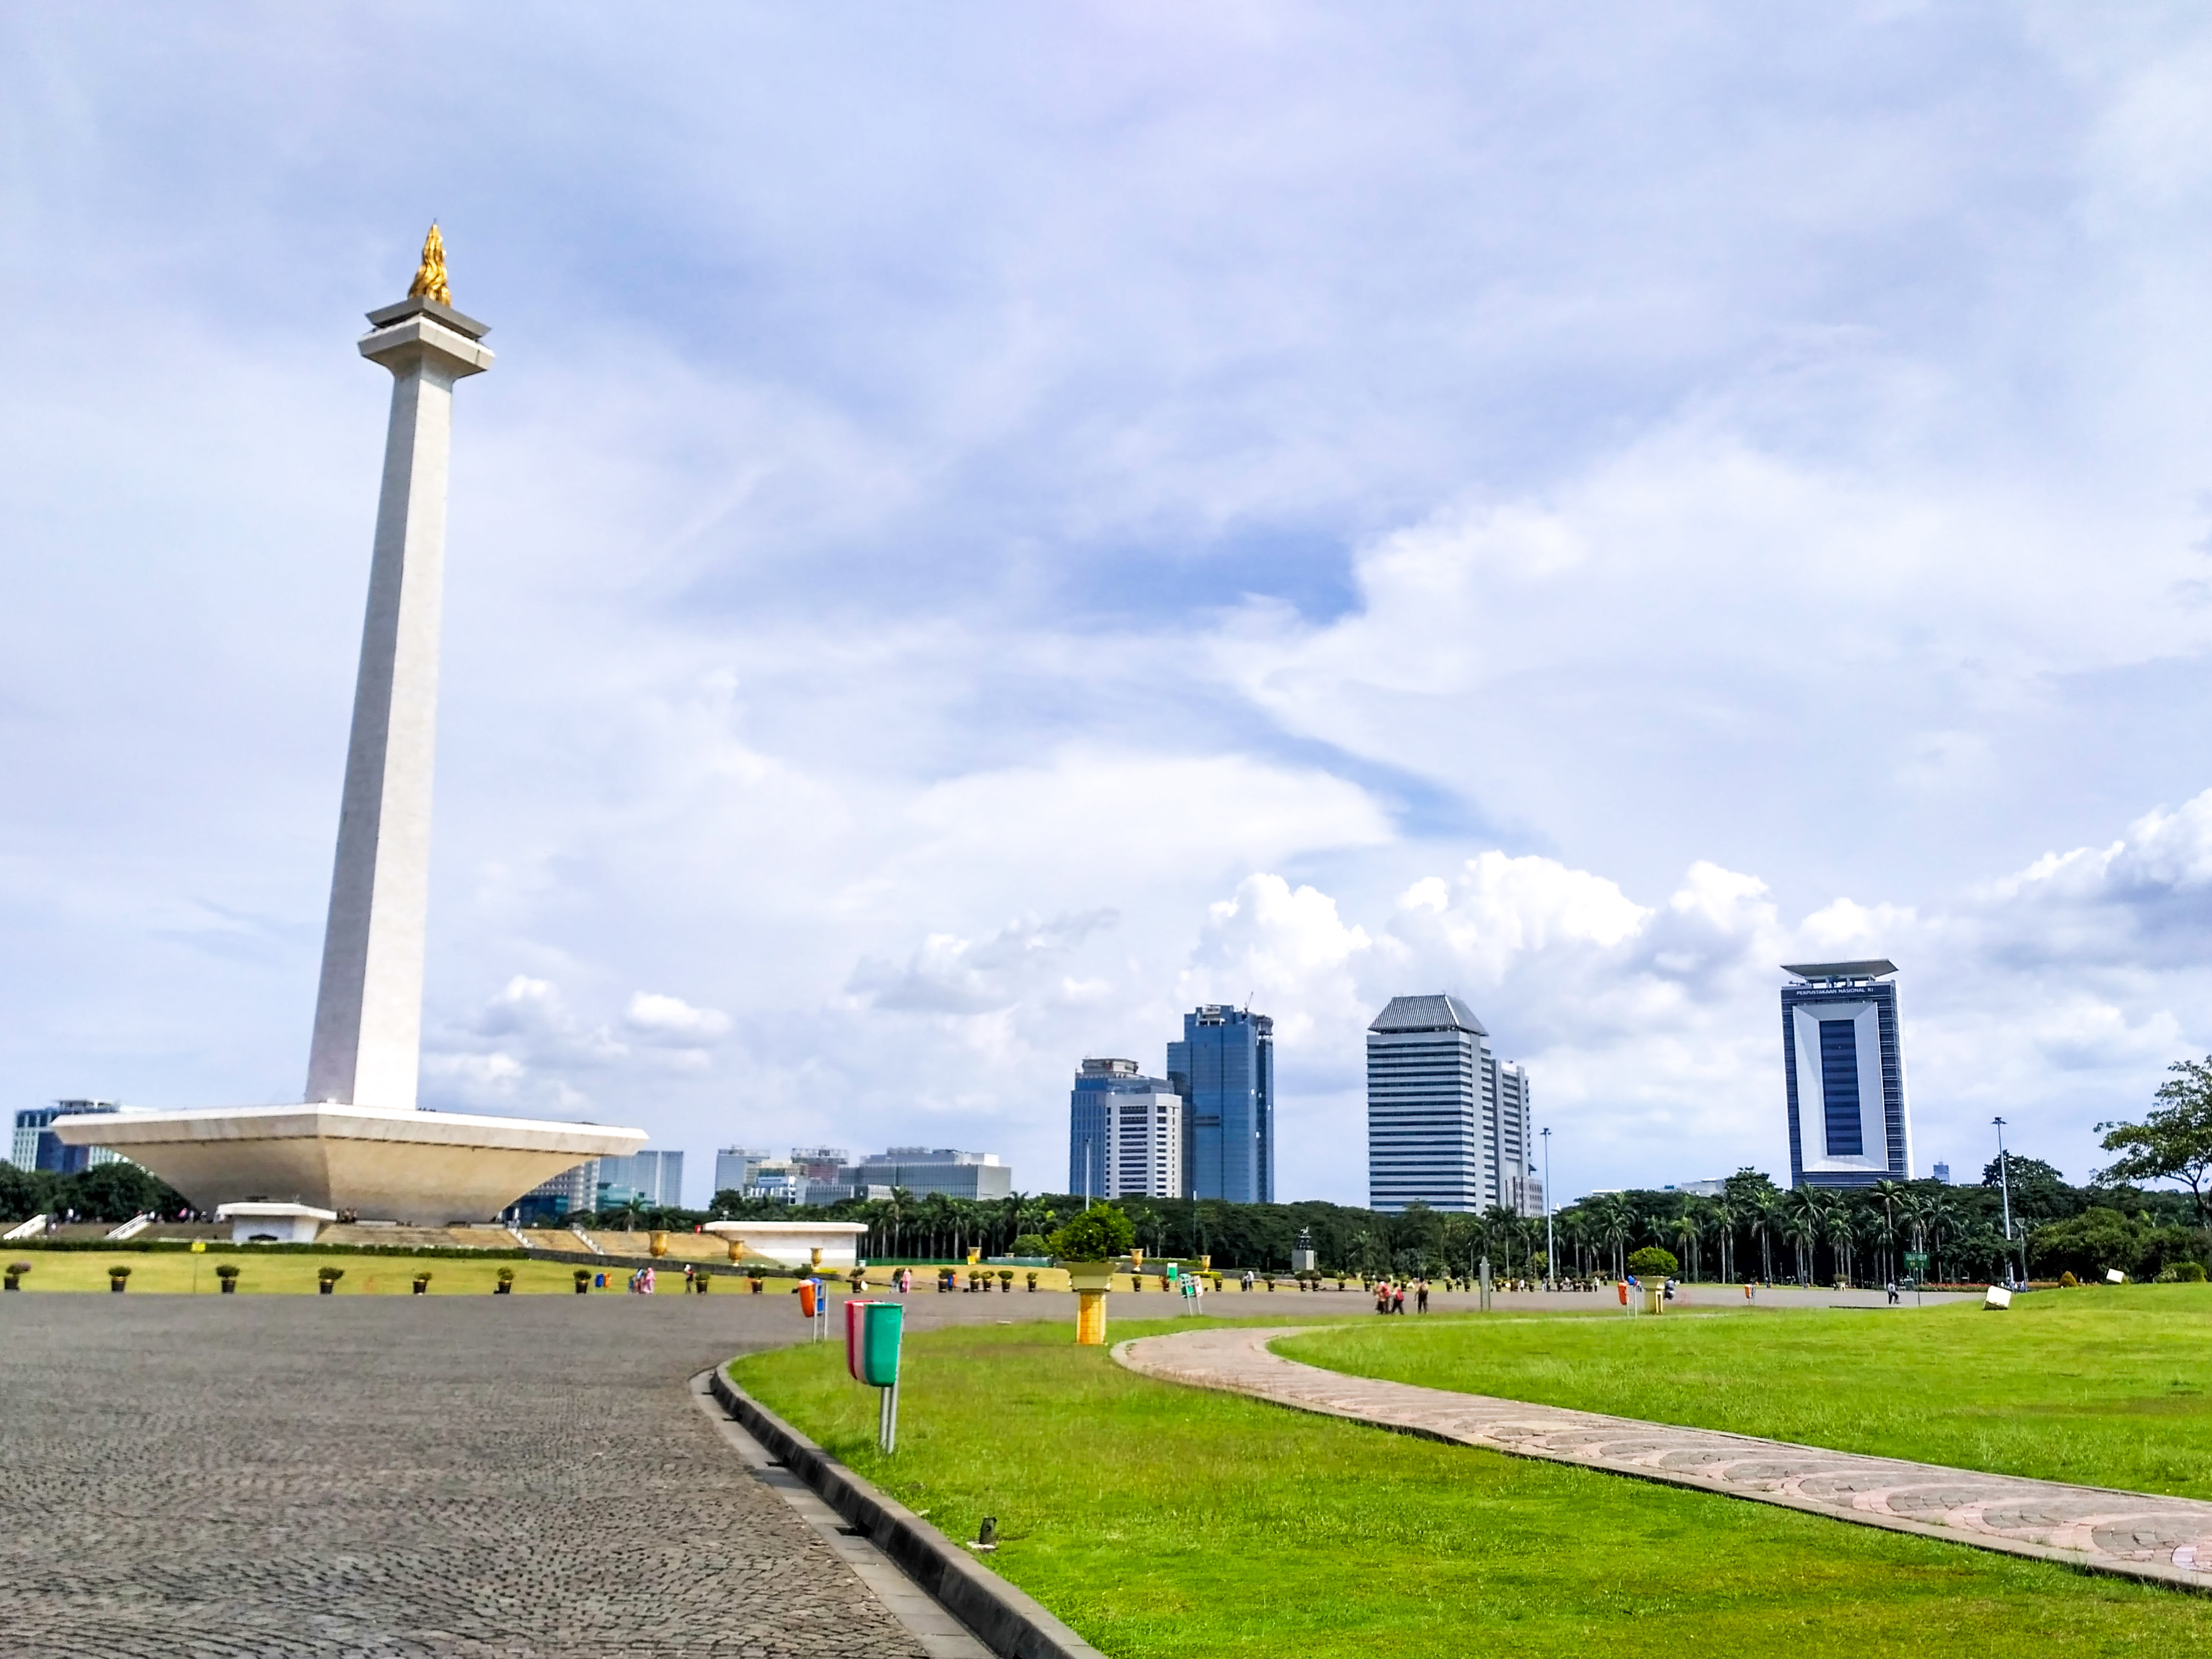 Monumen Nasional (c) Yudi Rahmatullah / Travelingyuk